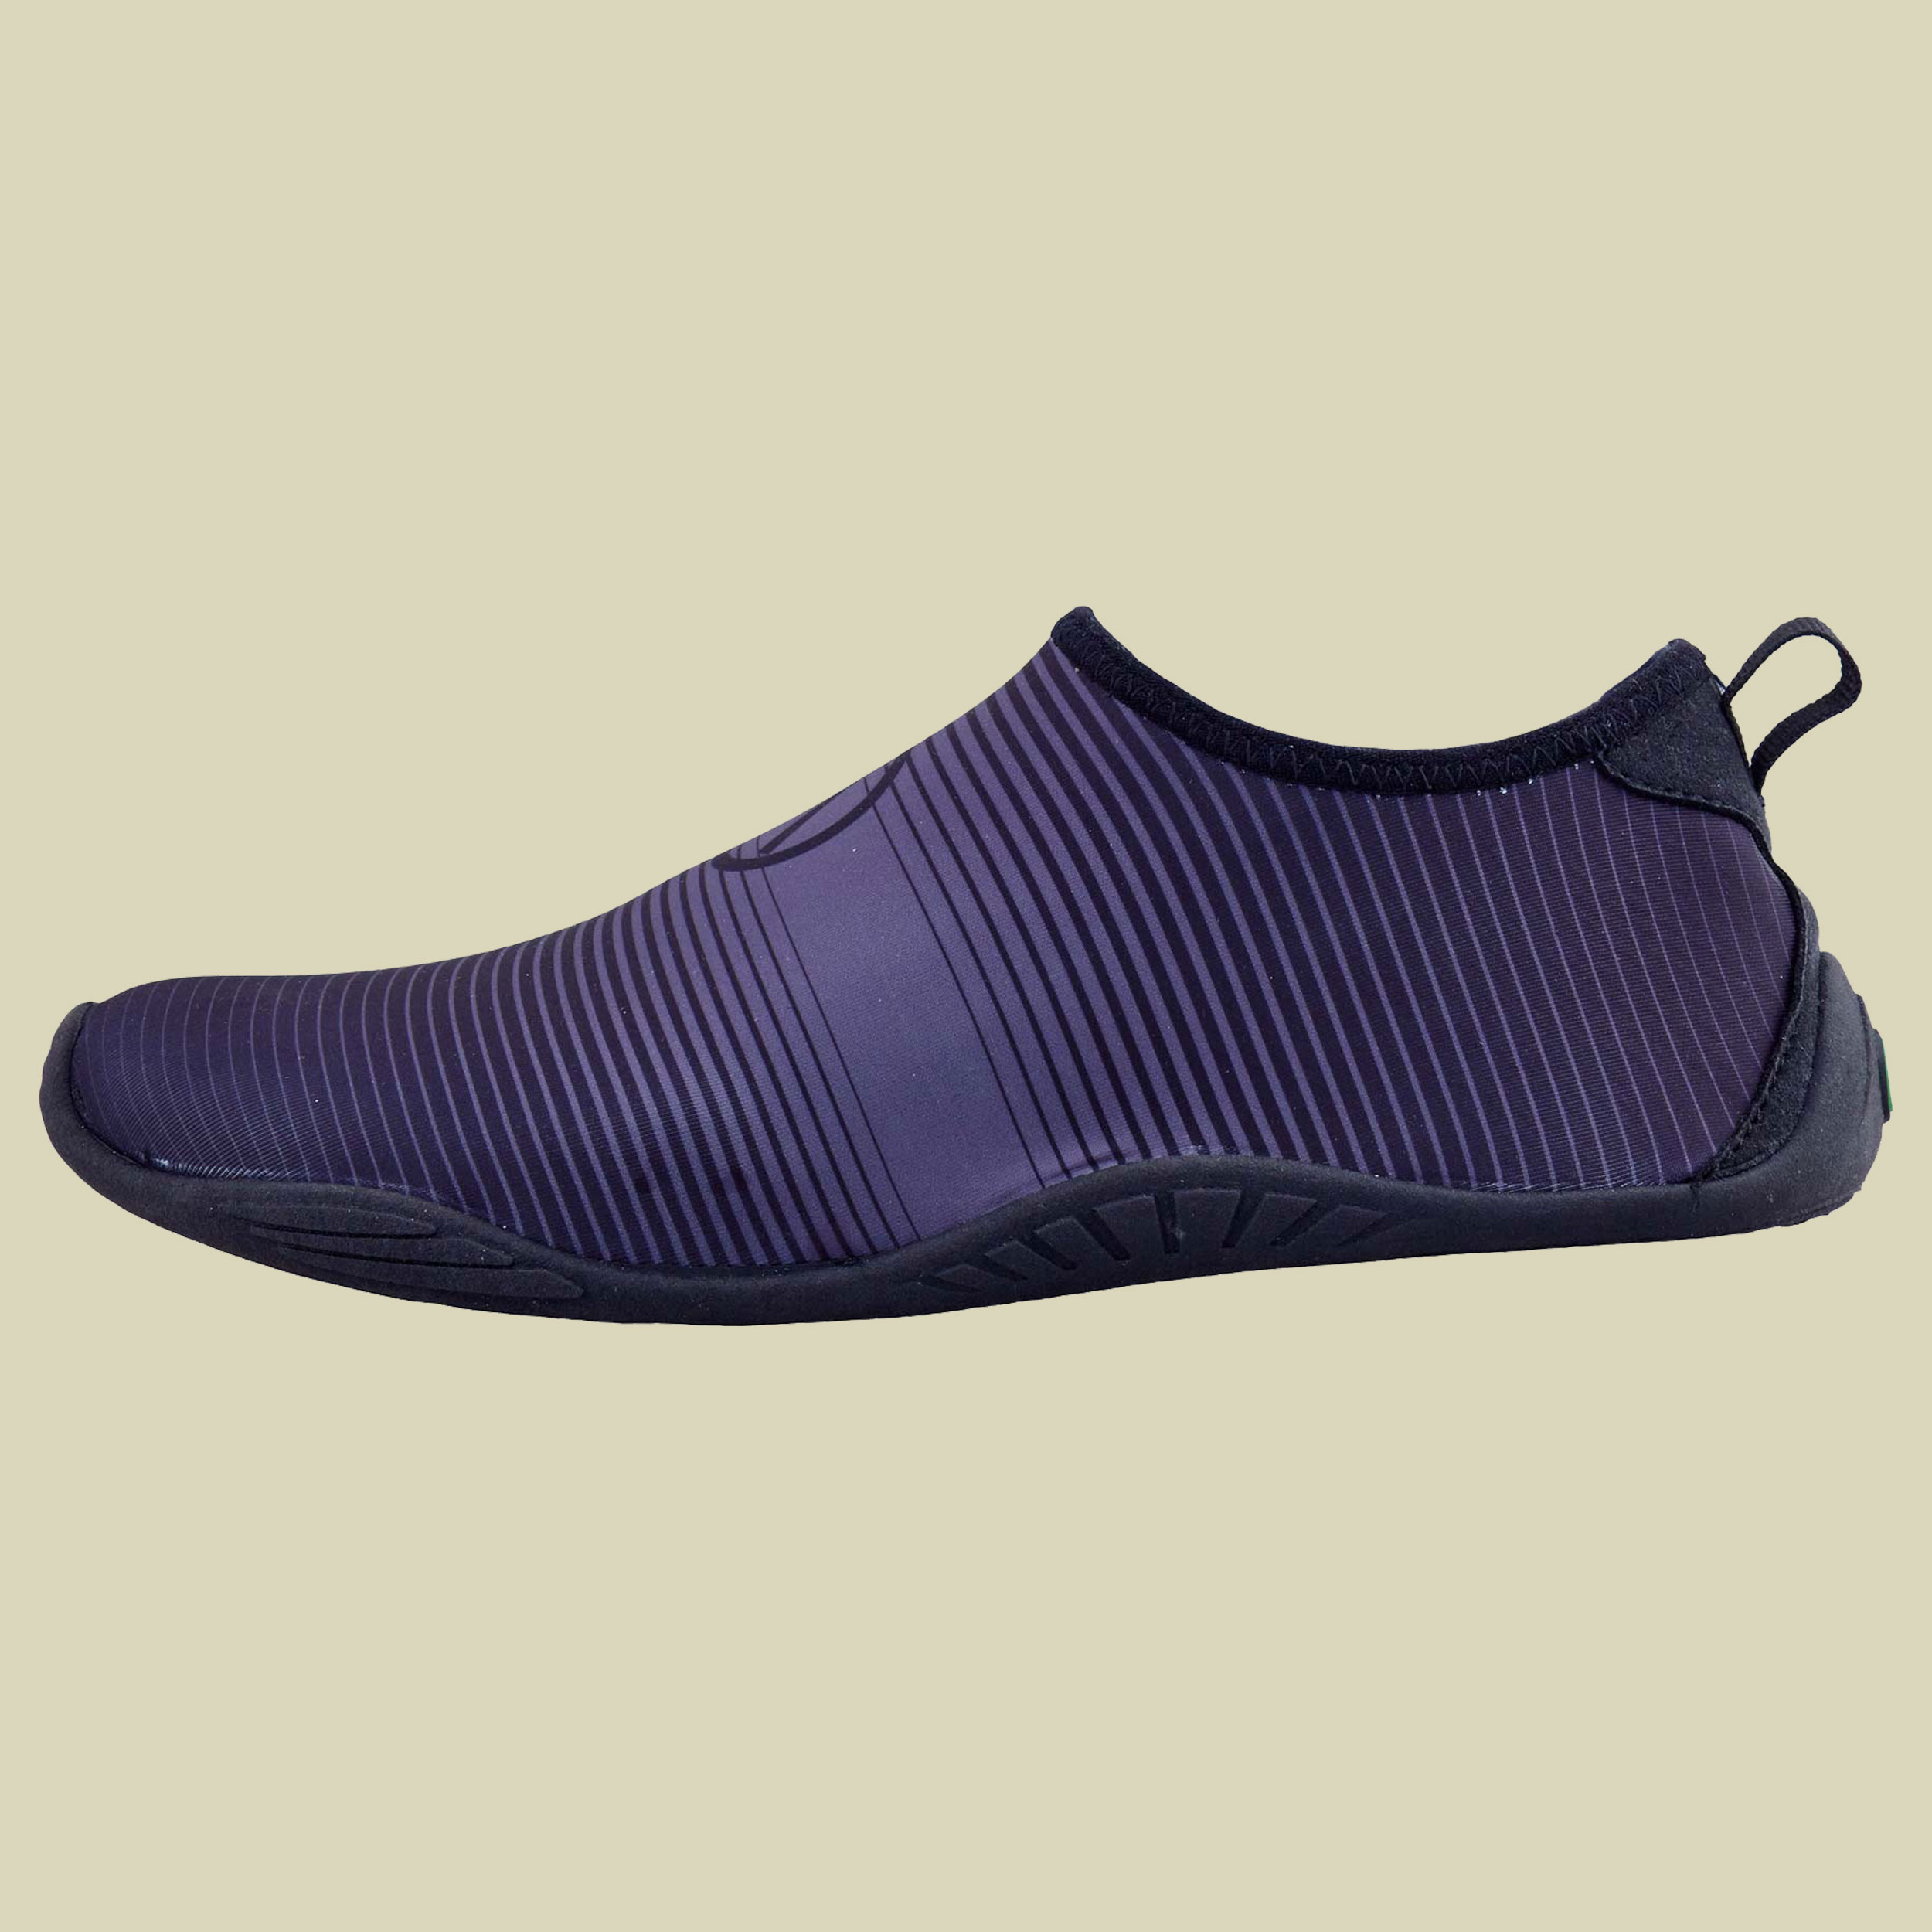 Spartan Barfuß-Schuhe Größe 45,5-46 Farbe astro black